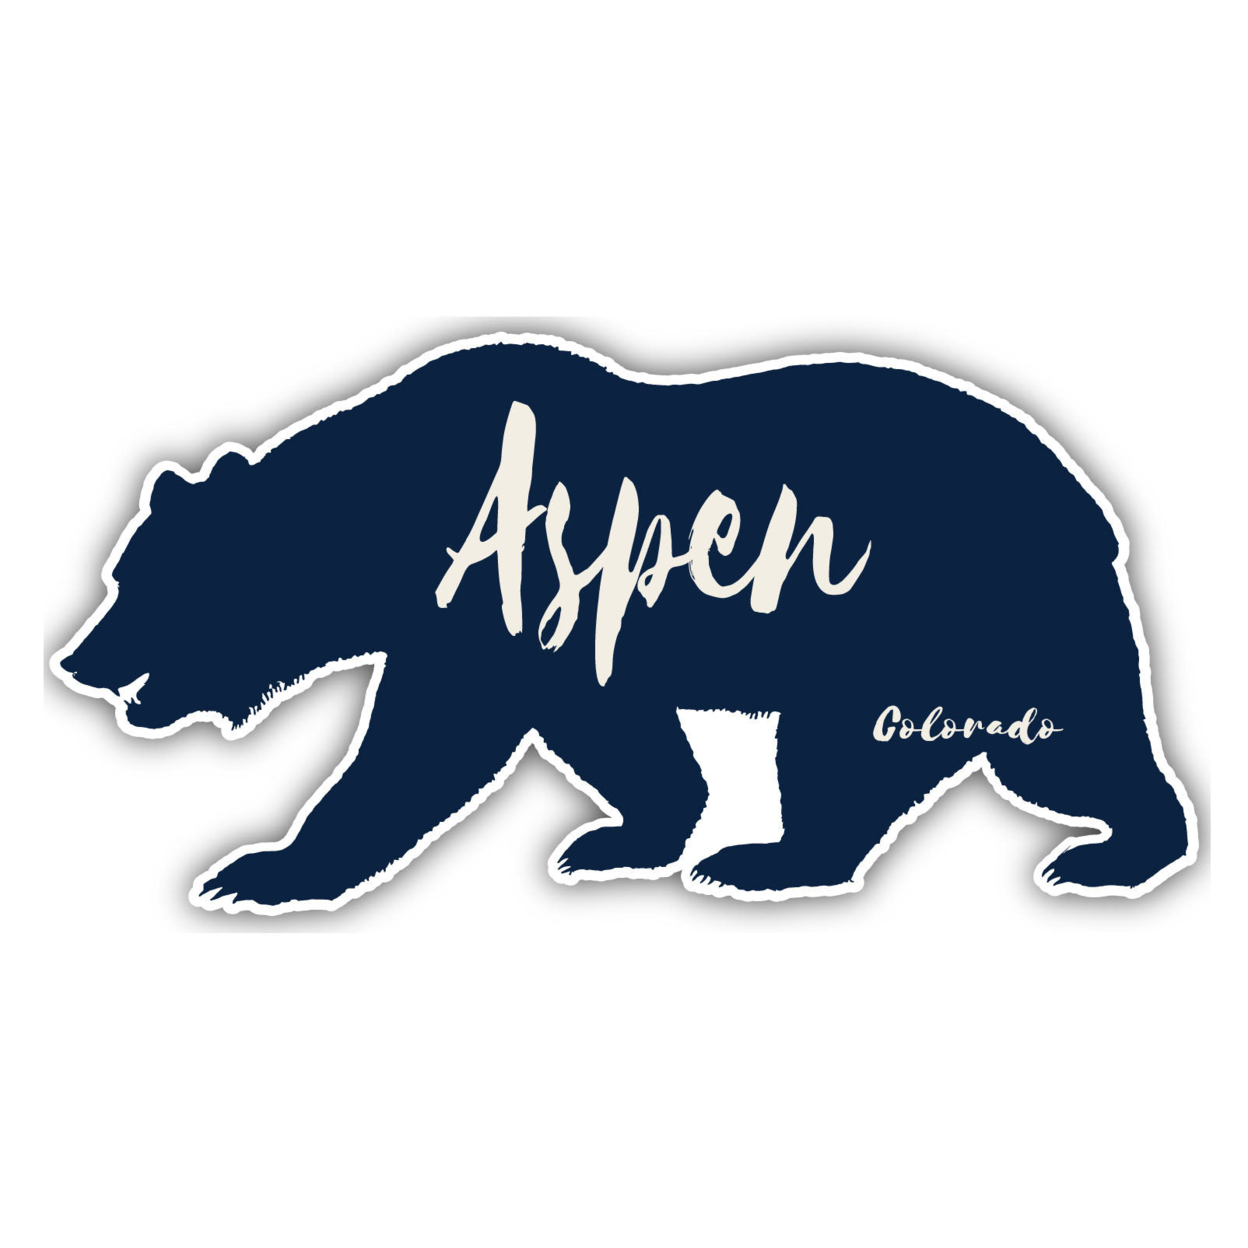 Aspen Colorado Souvenir Decorative Stickers (Choose Theme And Size) - 4-Pack, 6-Inch, Bear